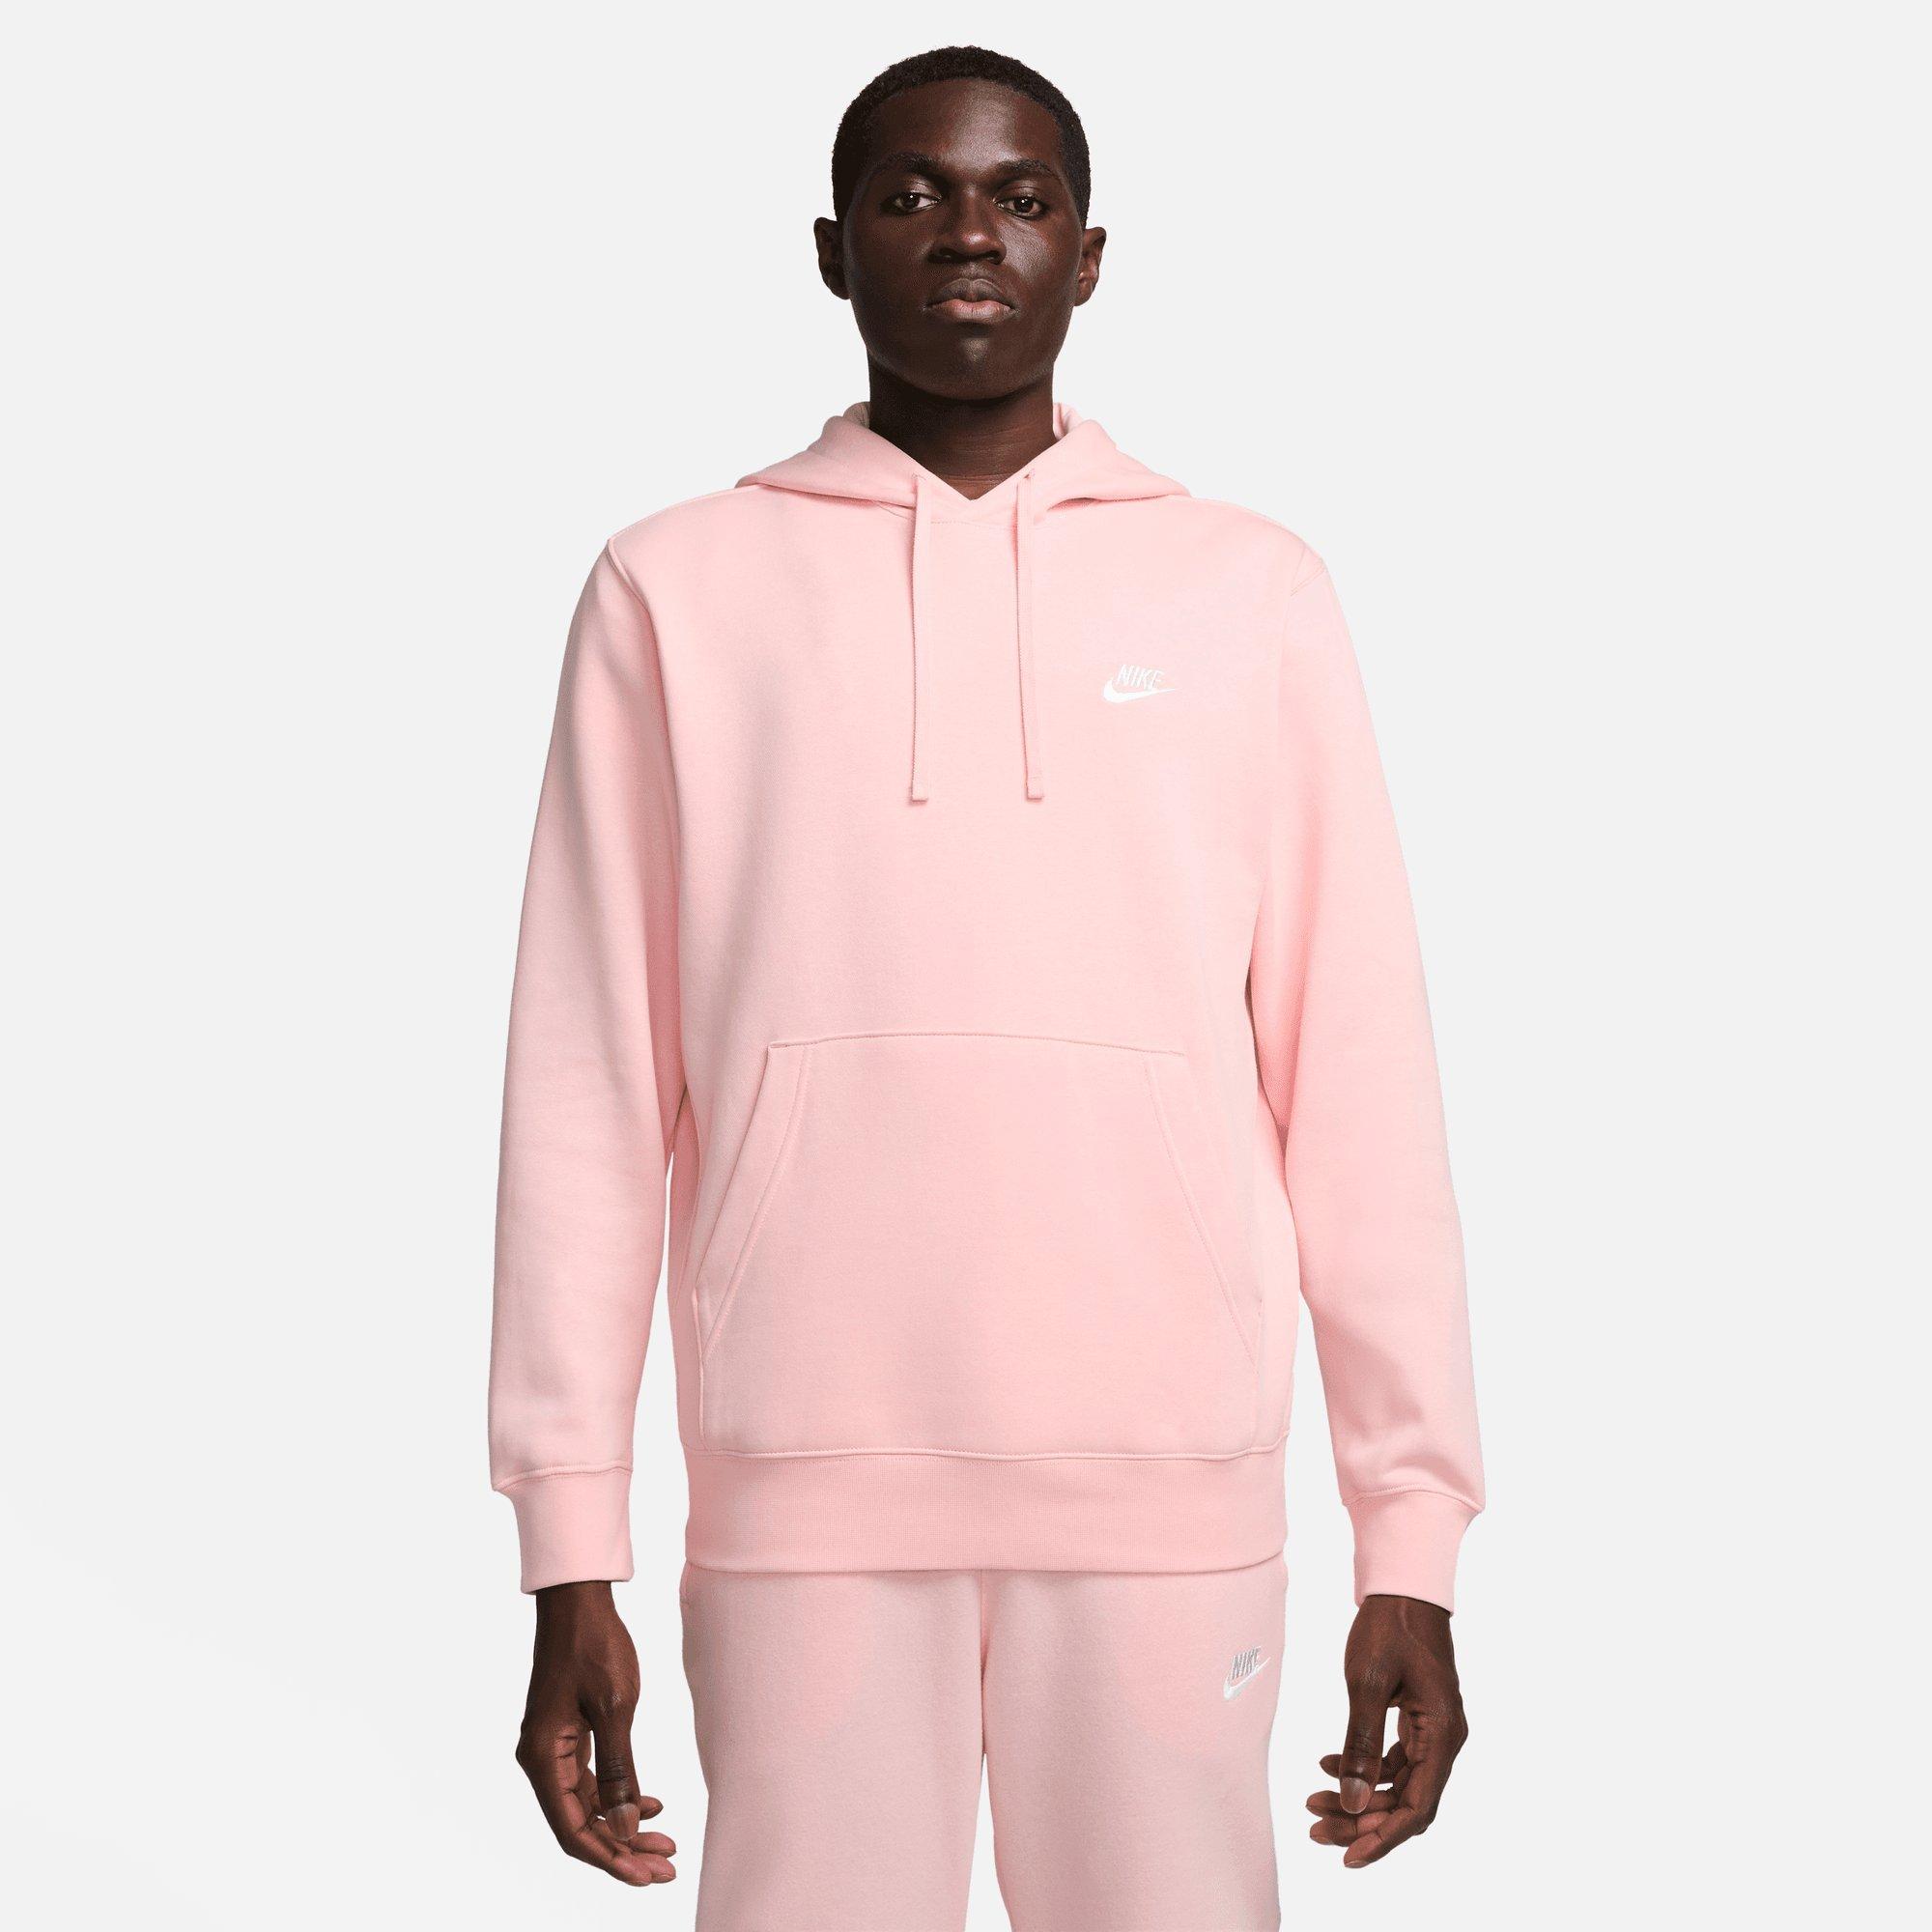 Nike Plus Club fleece joggers in soft pink